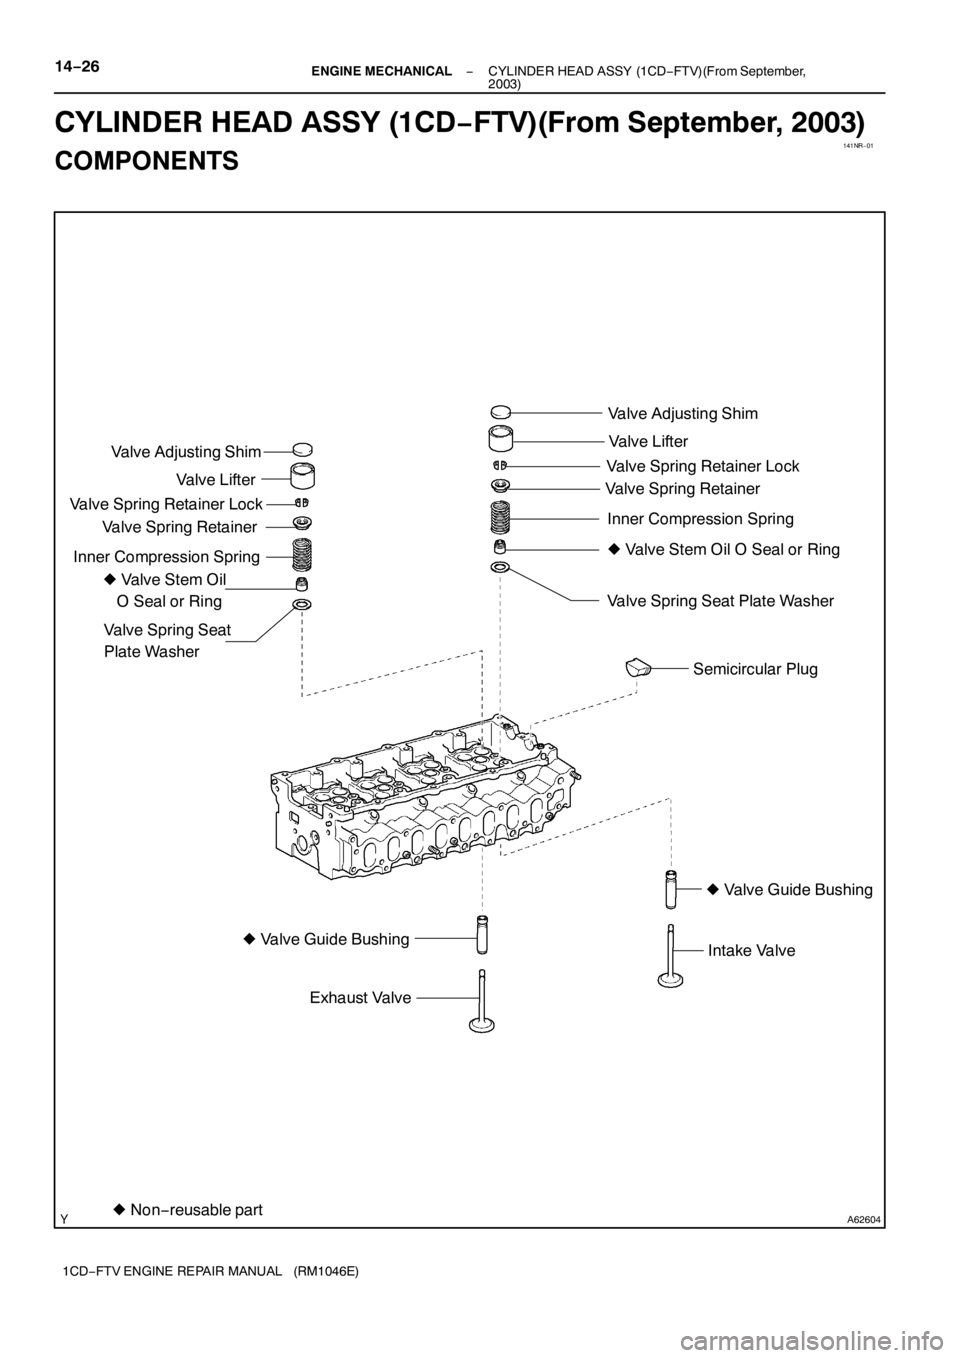 TOYOTA AVENSIS 2005  Service Repair Manual 141NR−01
A62604zNon−reusable part zValve Stem Oil
O Seal or Ring Valve Adjusting Shim
Valve Lifter
Valve Spring Retainer
Valve Spring Retainer Lock
Inner Compression Spring
Valve Spring Seat
Plate